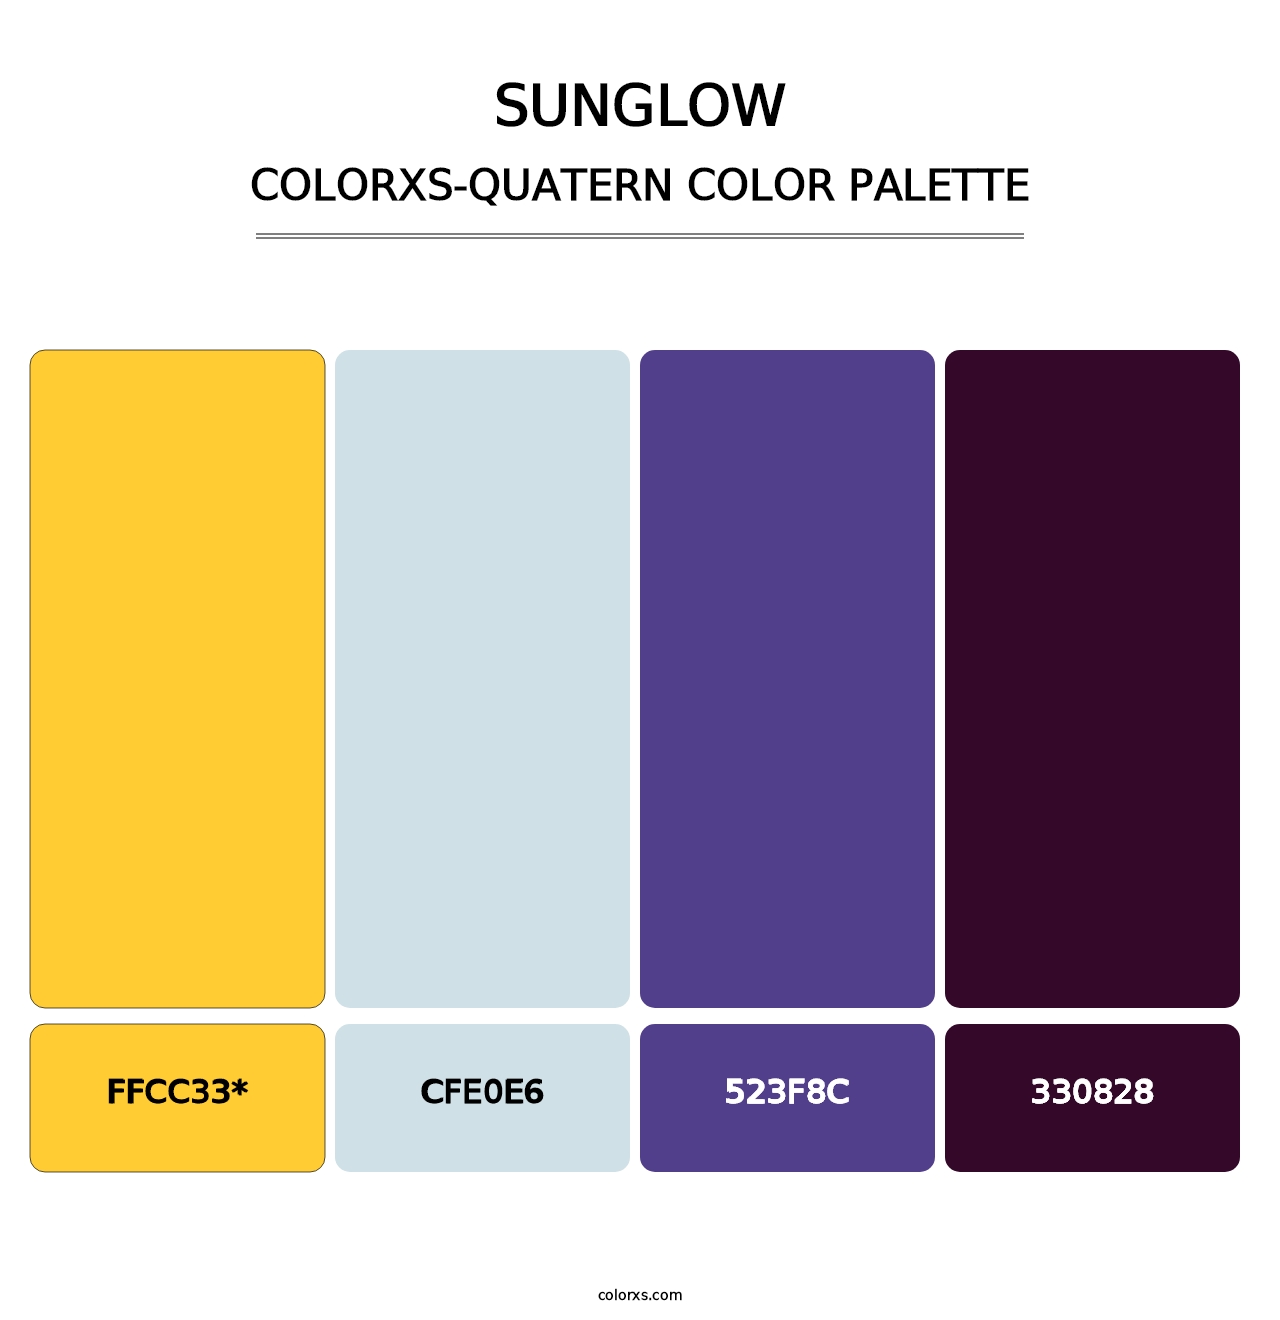 Sunglow - Colorxs Quatern Palette